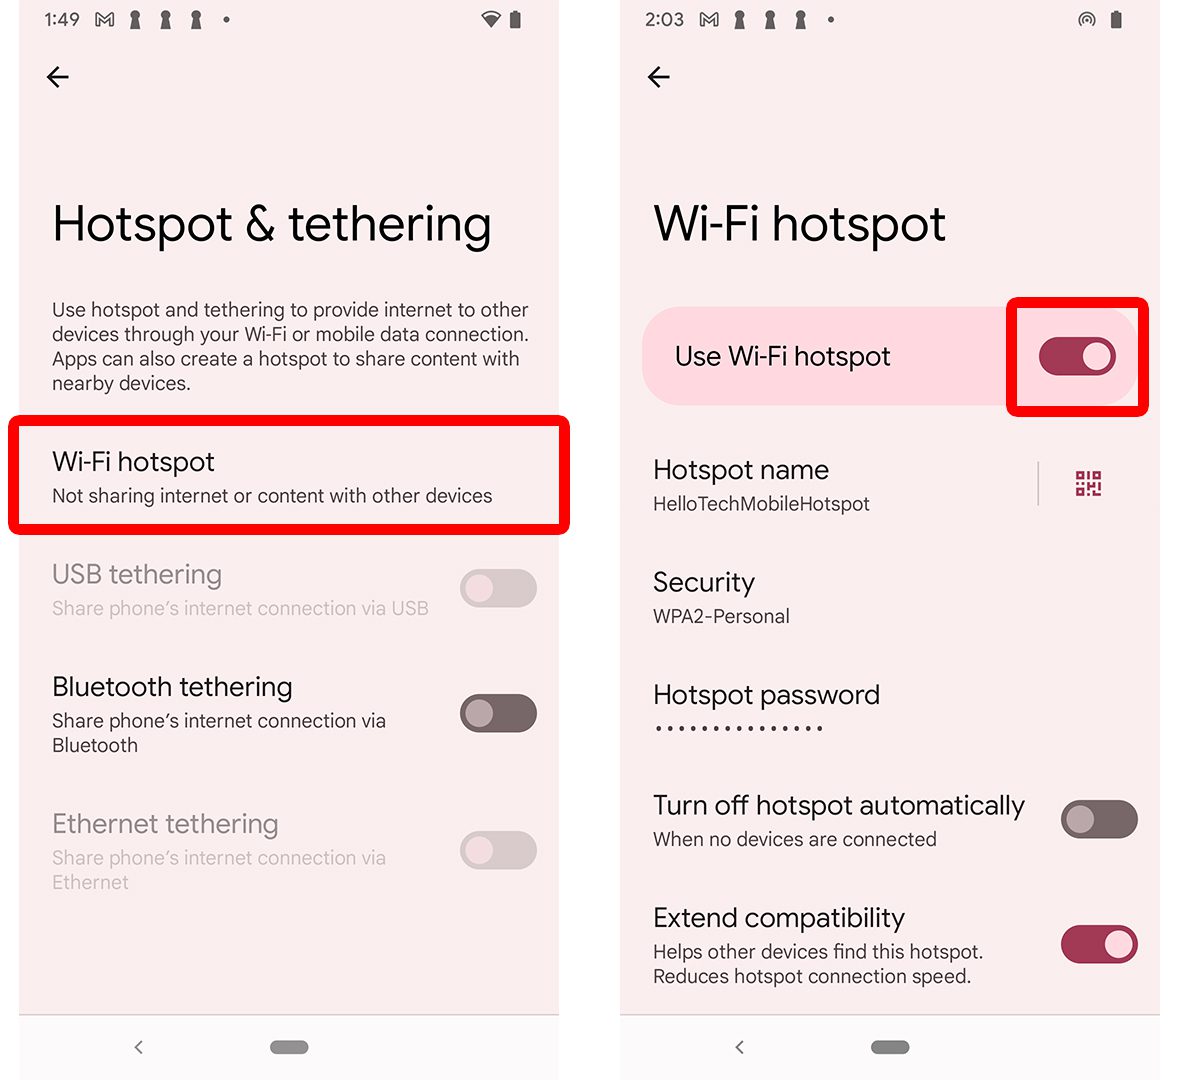 ¿Puedo usar hotspot sin wi-fi?